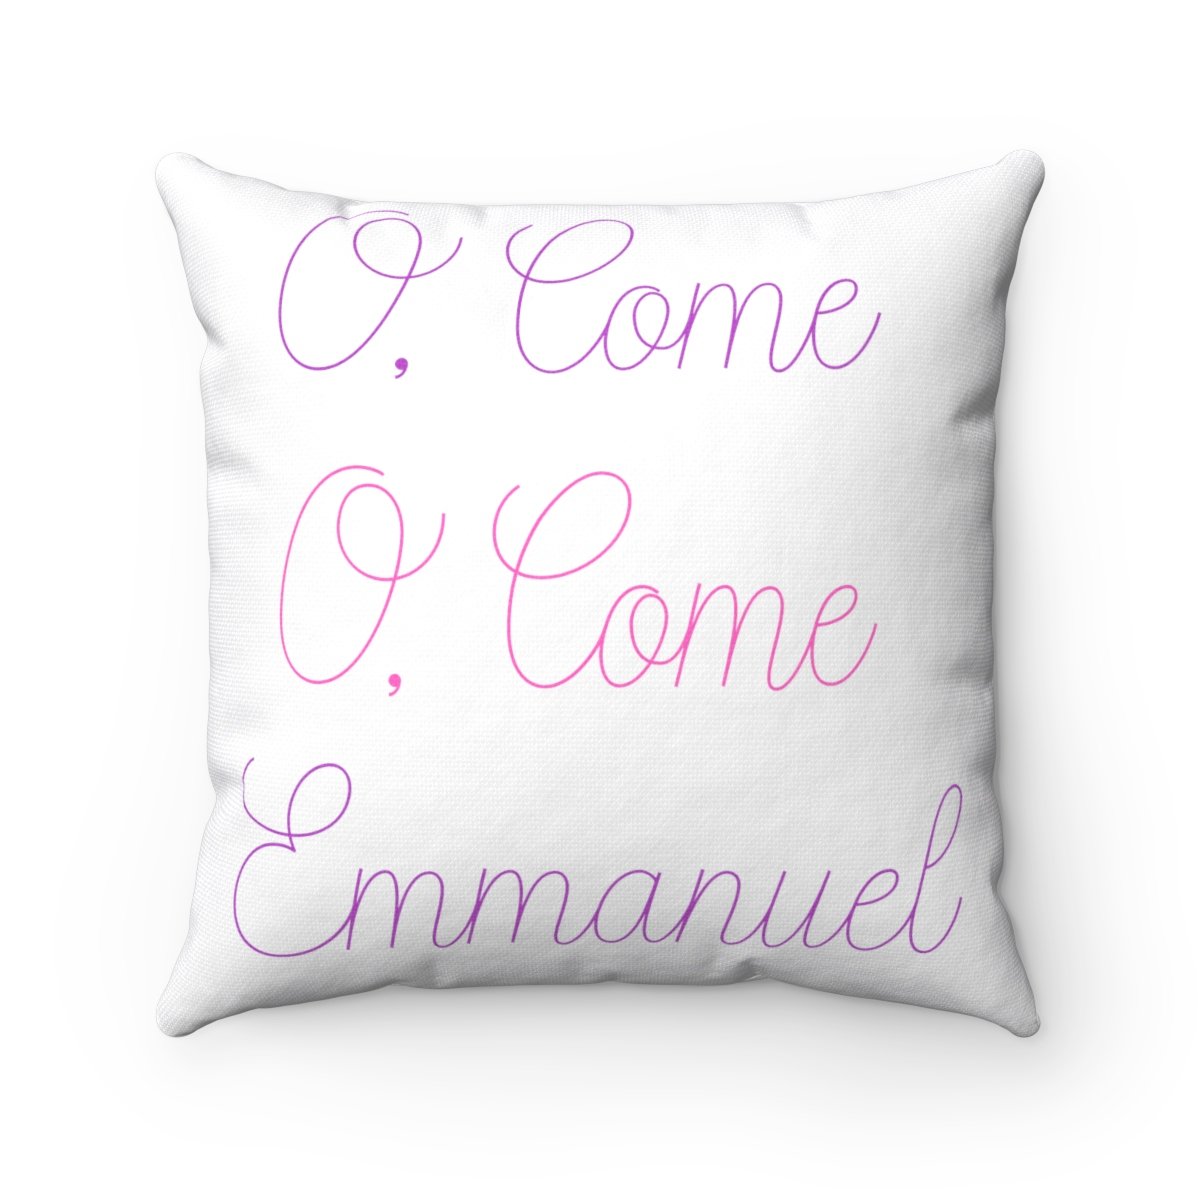 "O' Come Emmanuel" Throw Pillow